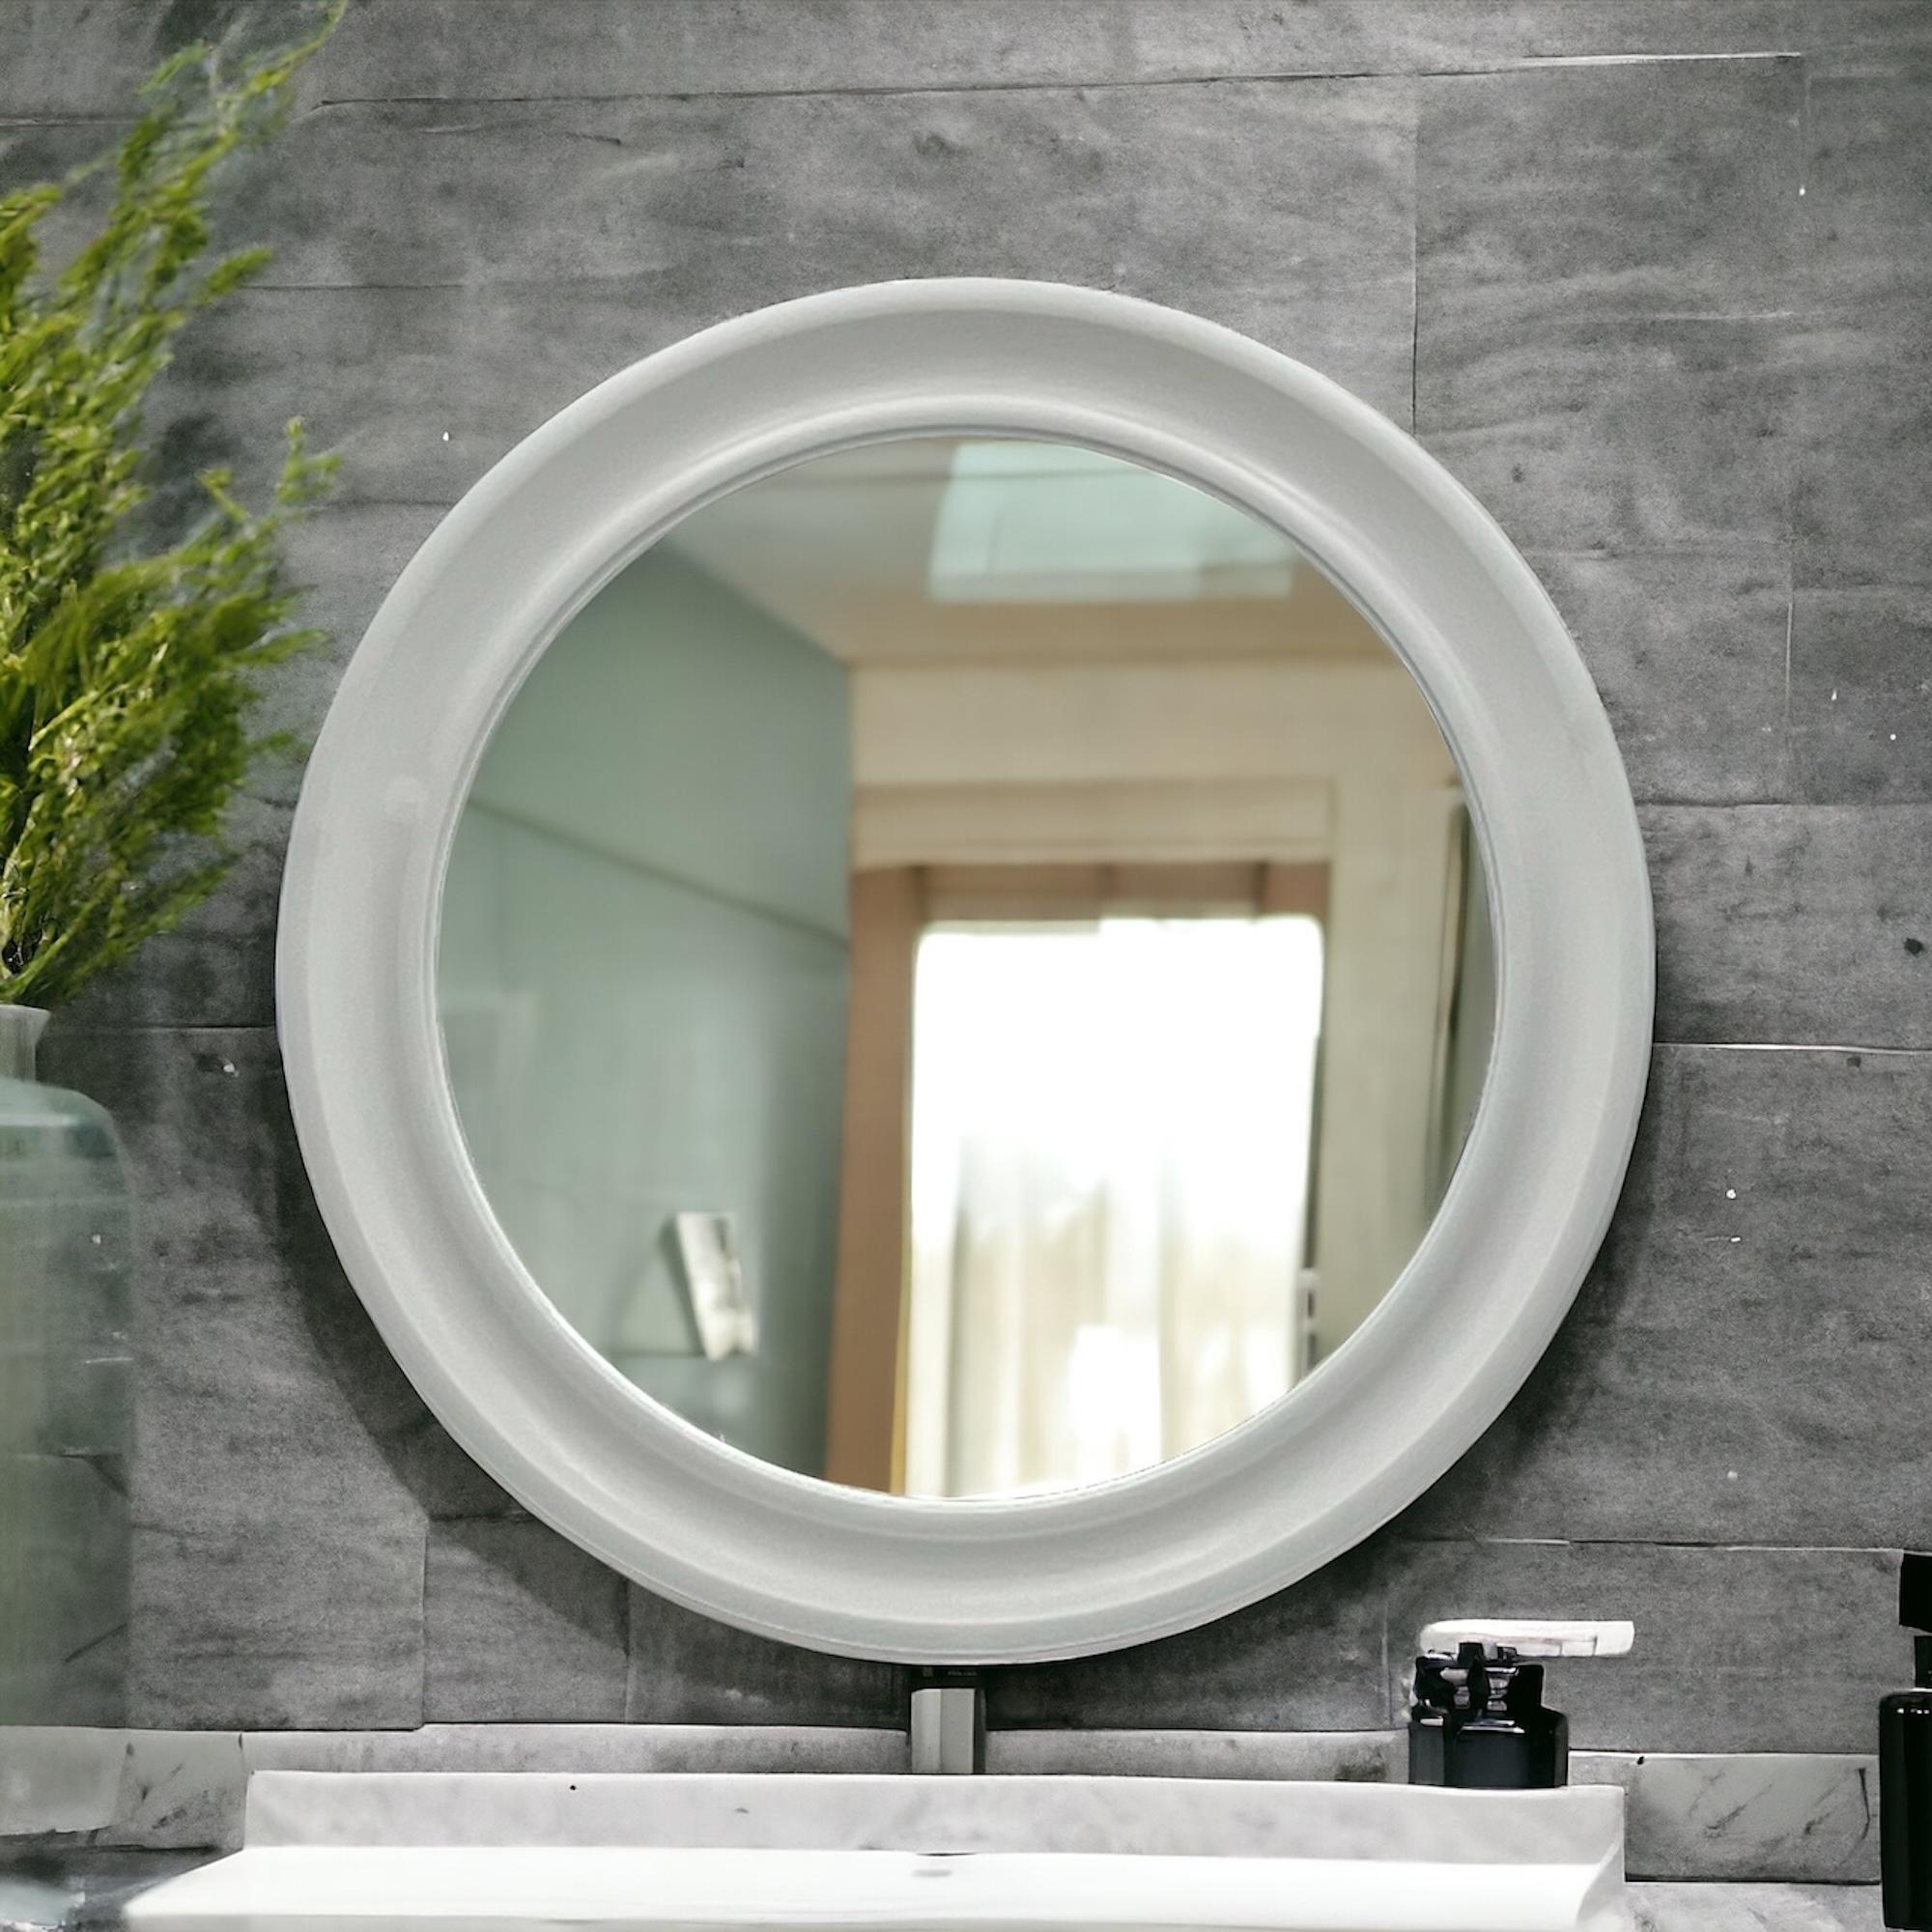 European Carrara & Matta 'America' Wall Mirror in off-white - 70s Patent Bakelite Design